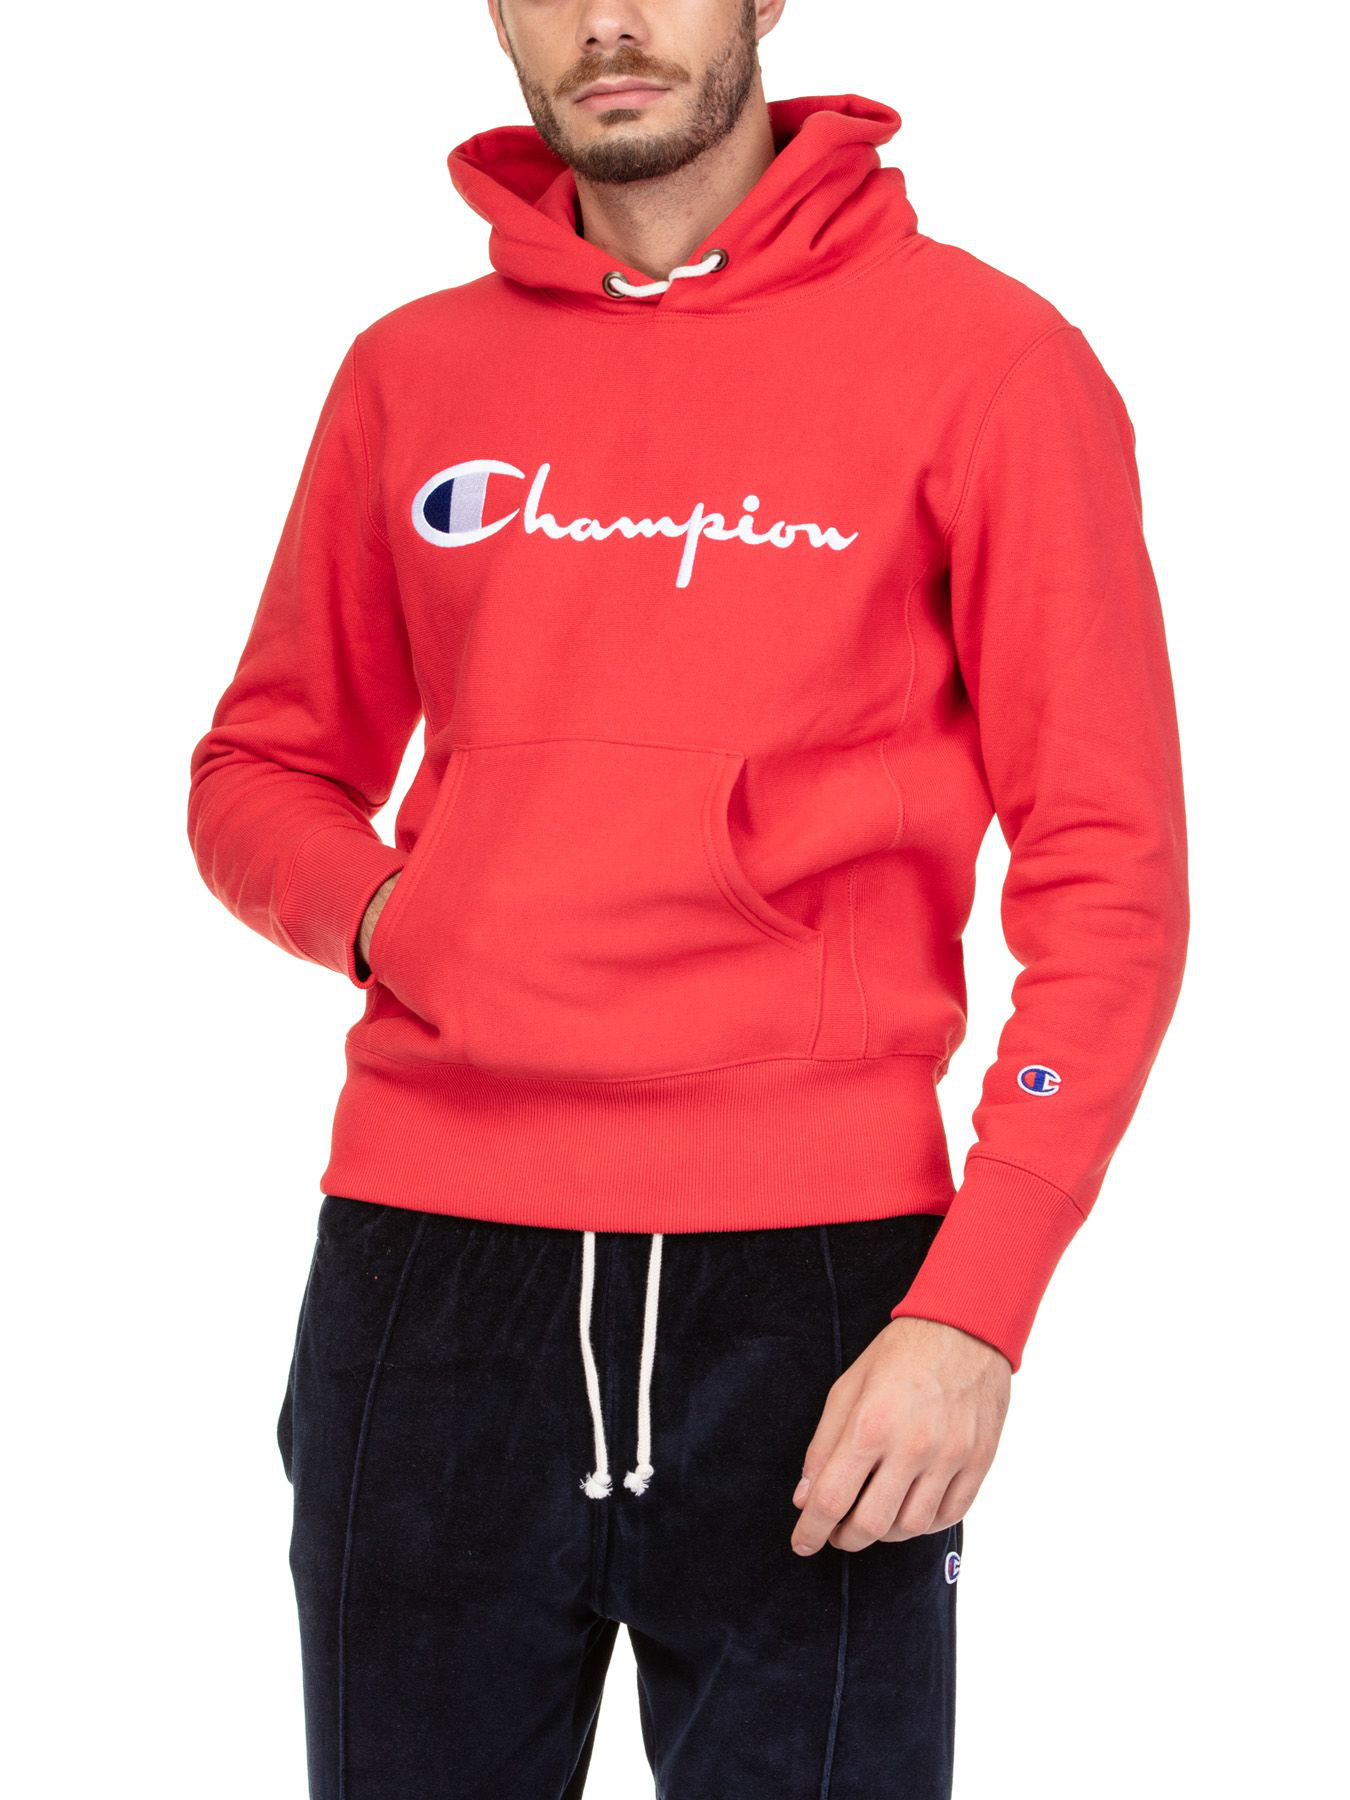 champion sweatshirt red white blue